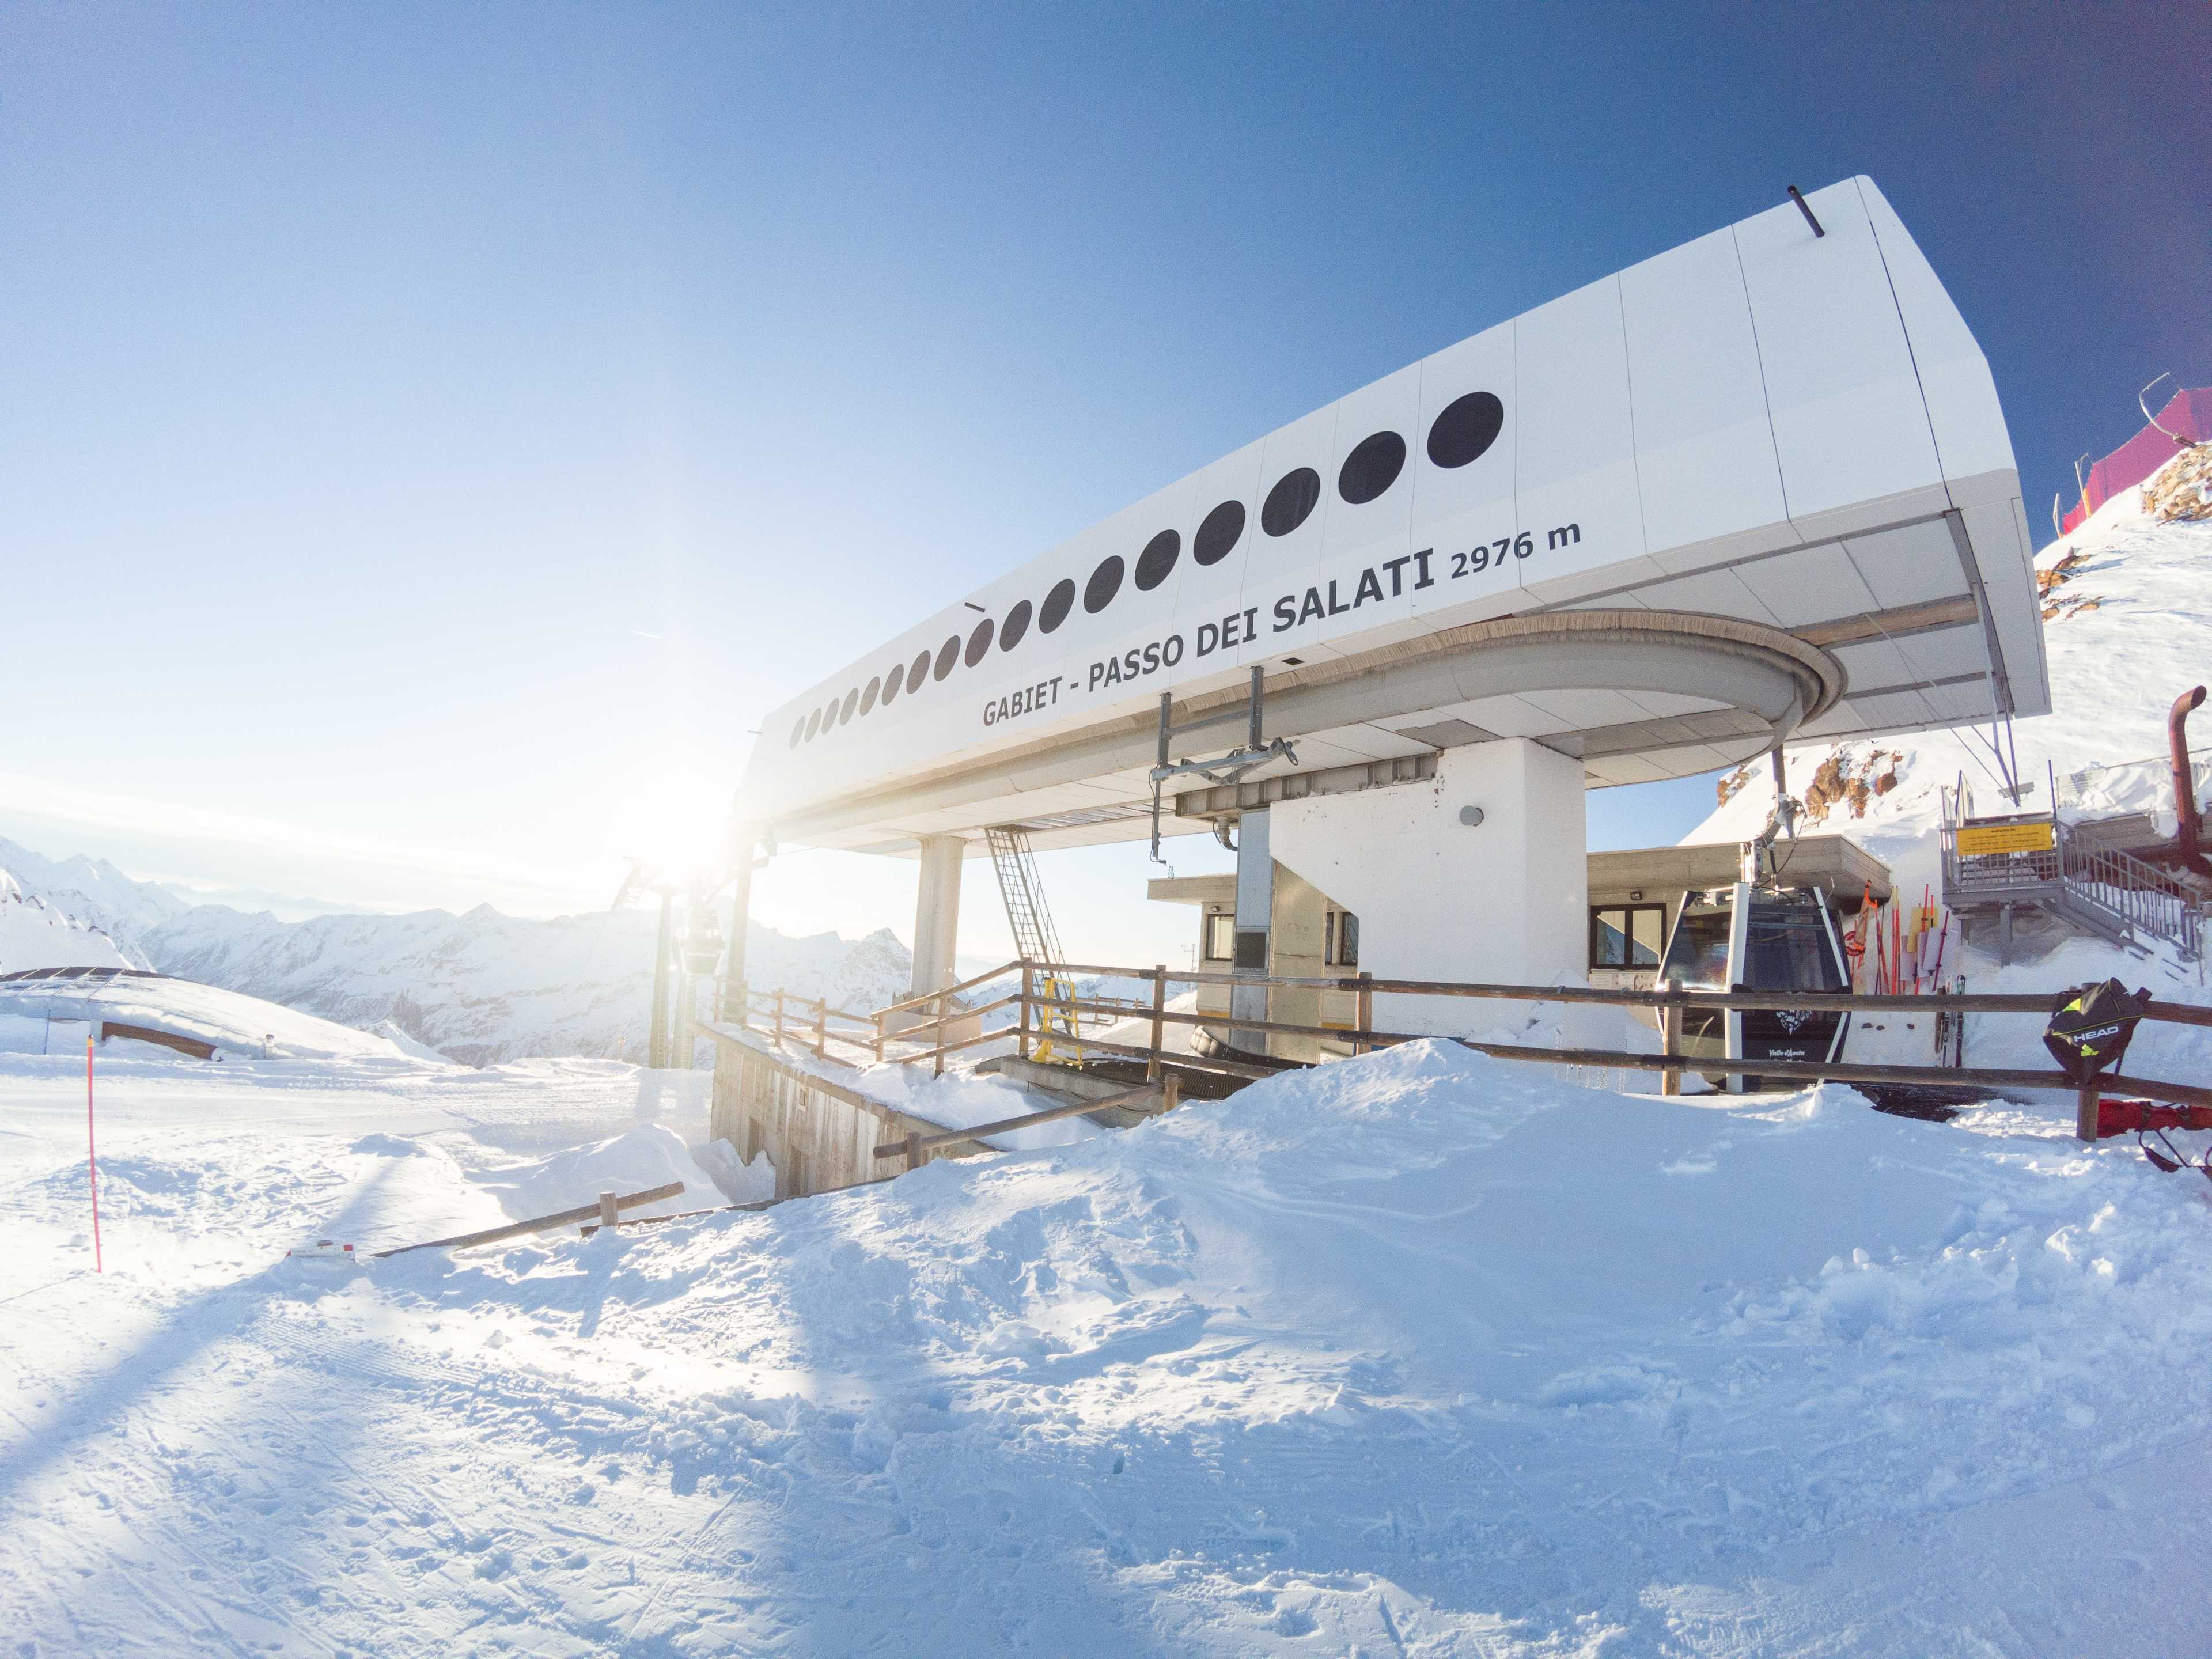 Gabiet-Salati gondola lift mountain station, Monterosa Ski